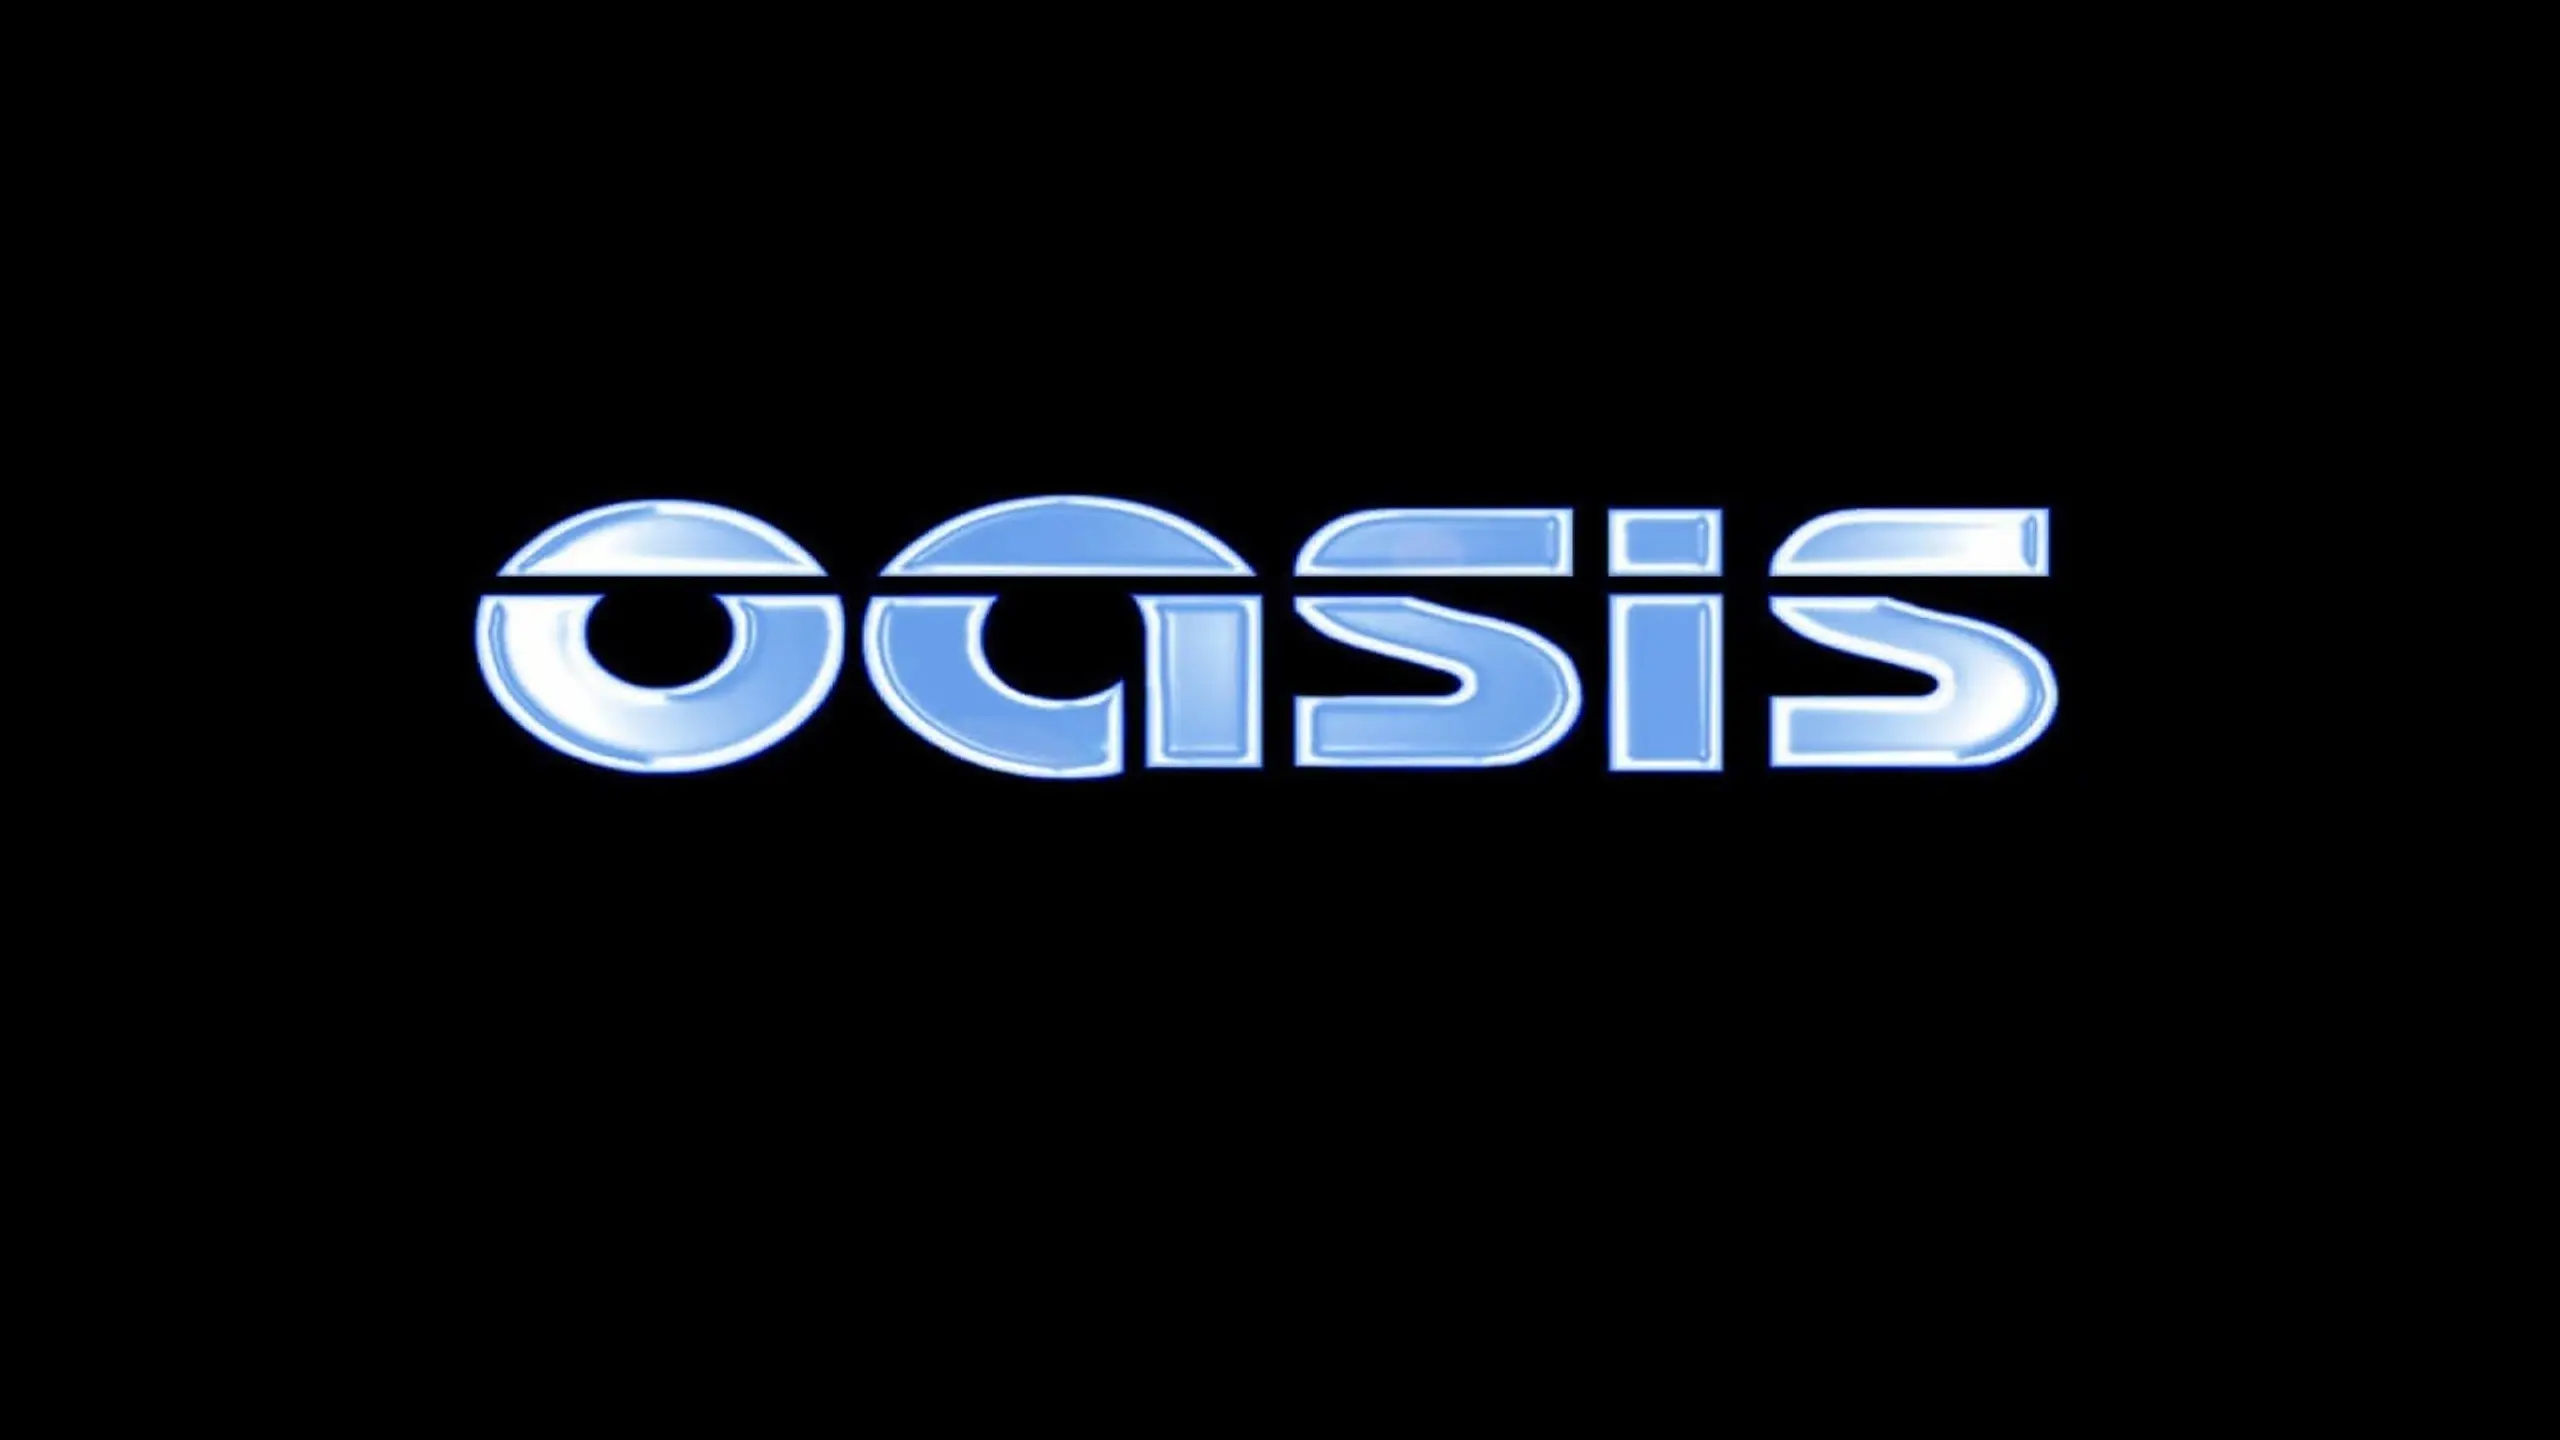 Oasis: Familiar To Millions